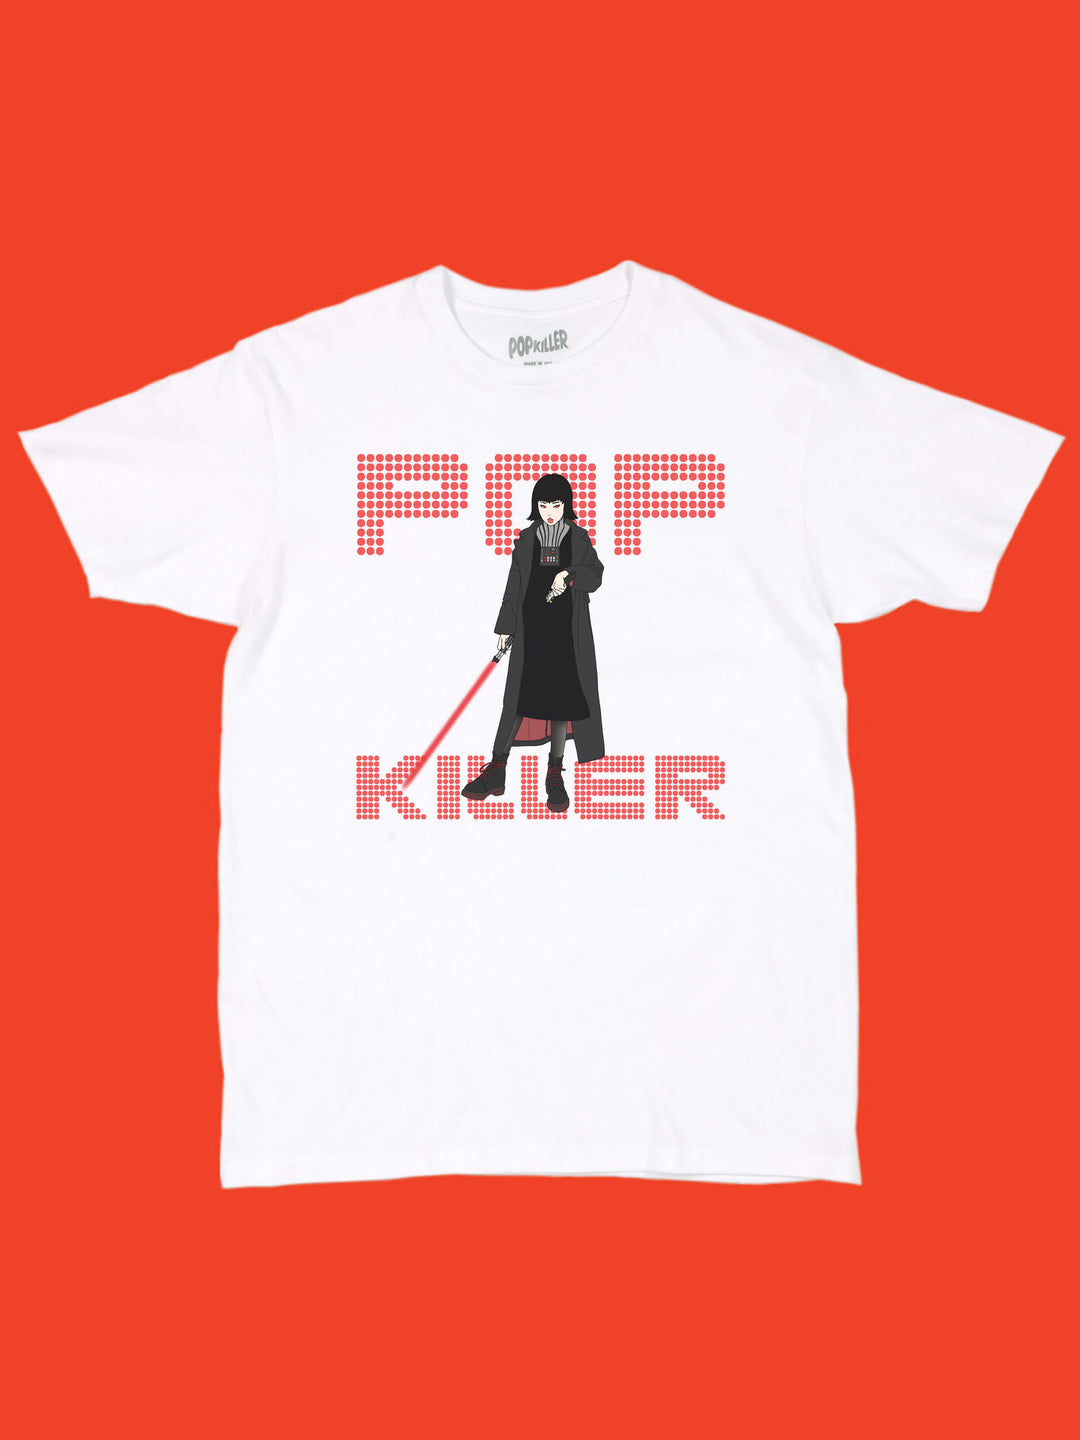 Anime Darth Vader girl graphic t-shirt.